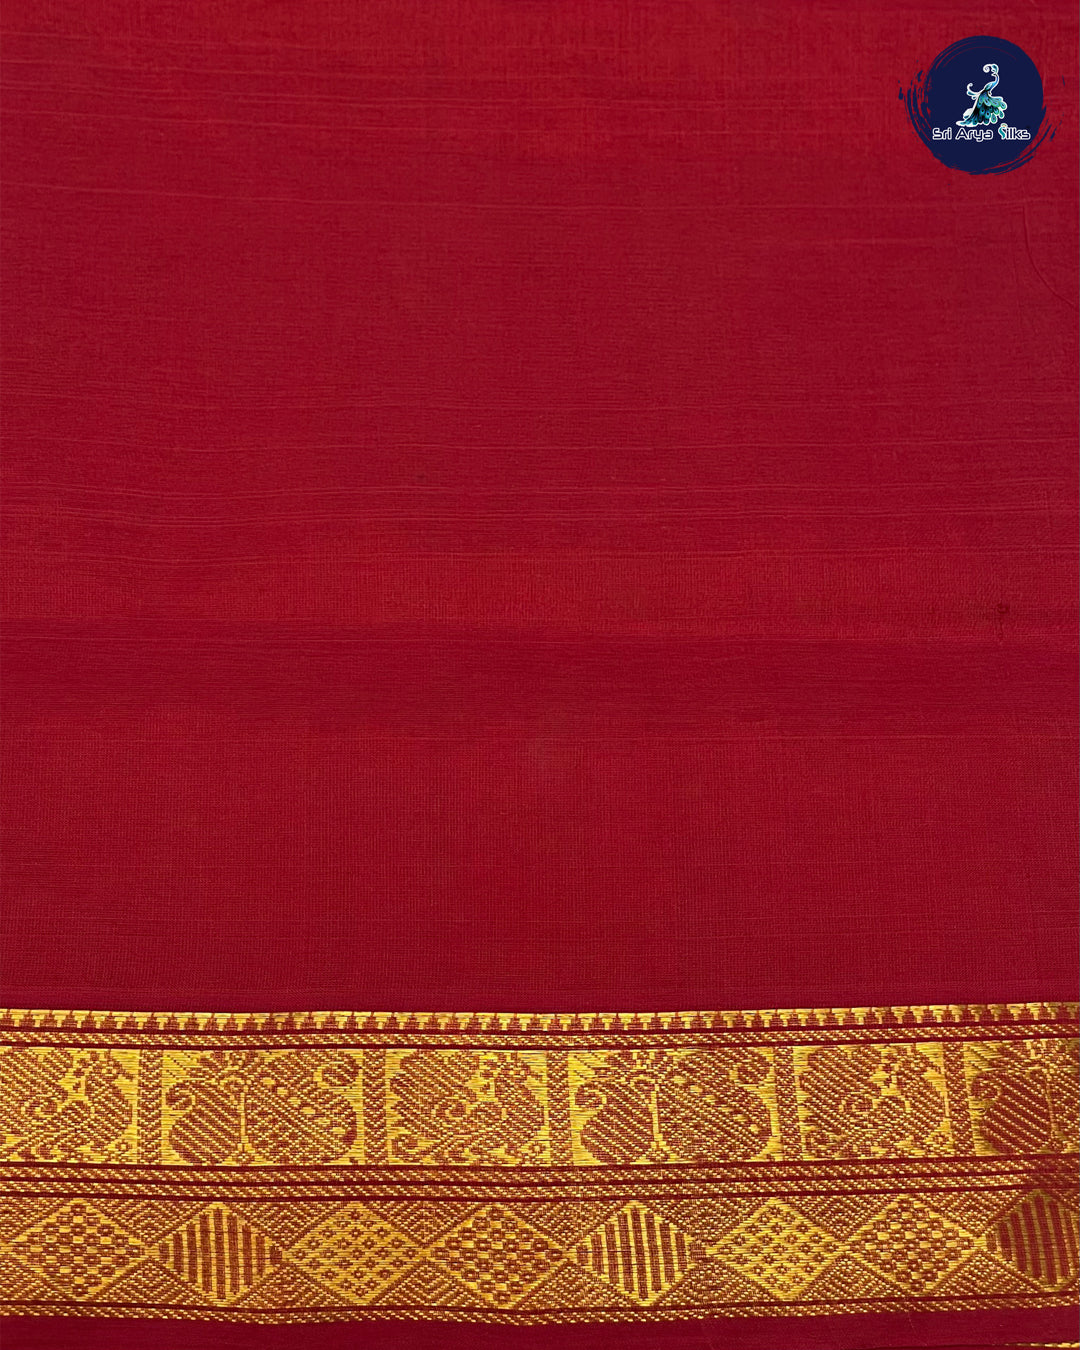 Mustard Yellow and Red Handloom Vairaoosi Silk Cotton Saree